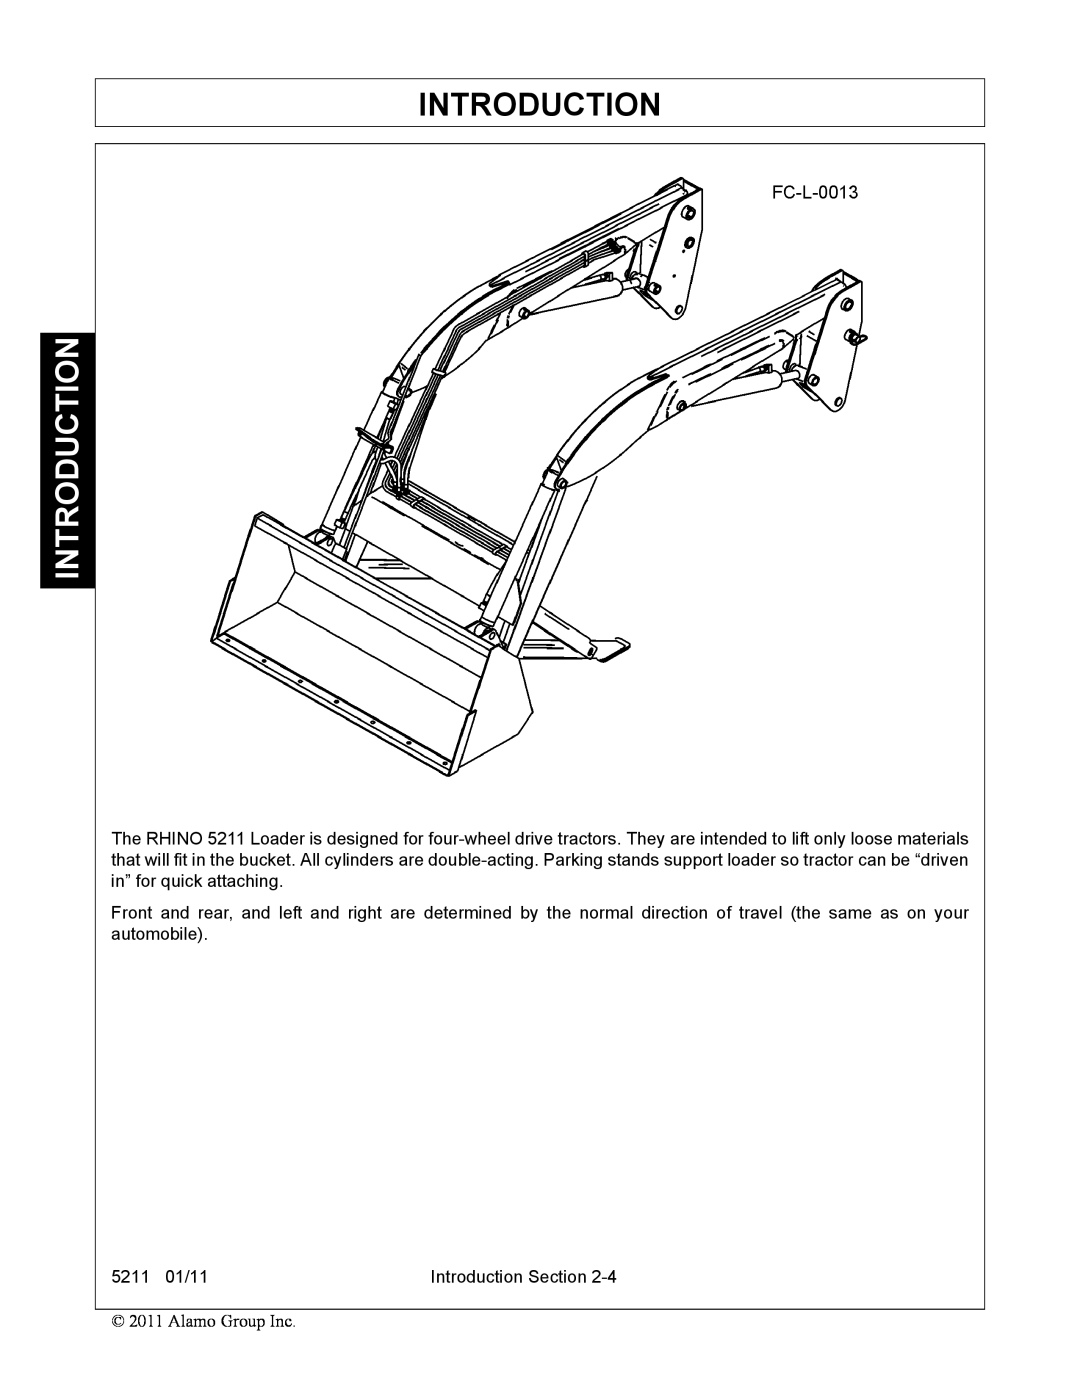 Servis-Rhino 5211 manual Introduction 